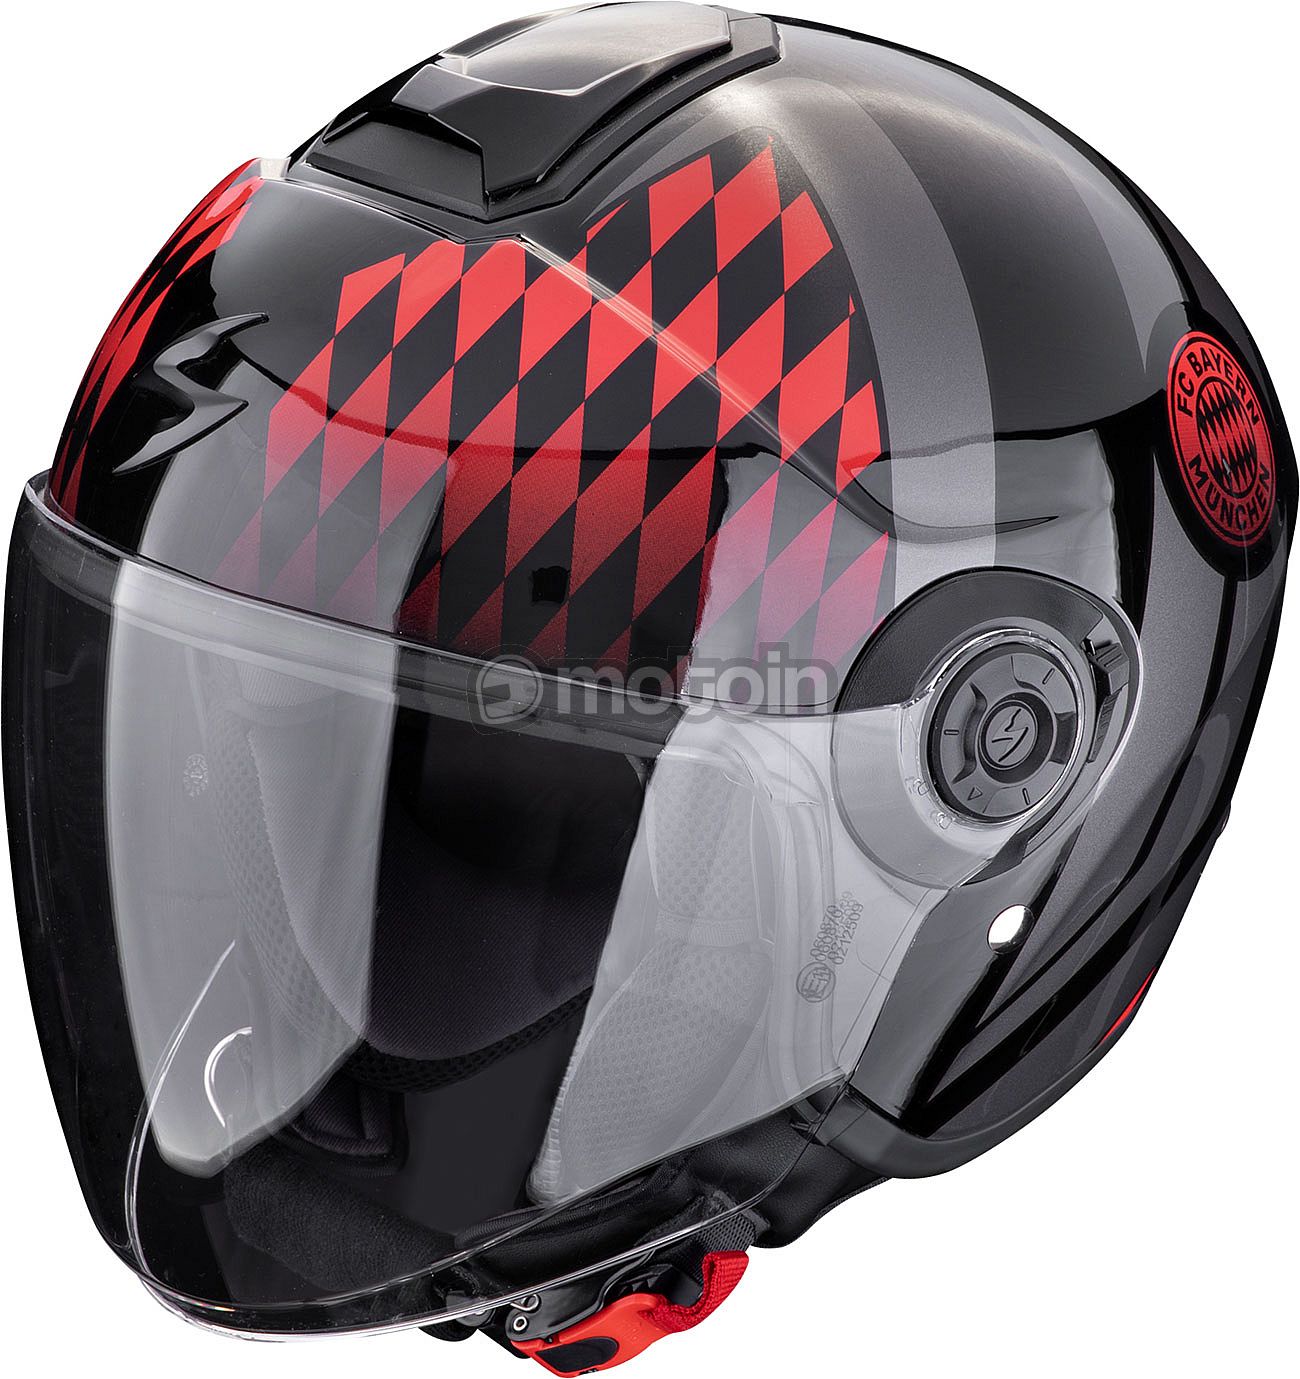 Scorpion EXO-City II FC Bayern, реактивный шлем